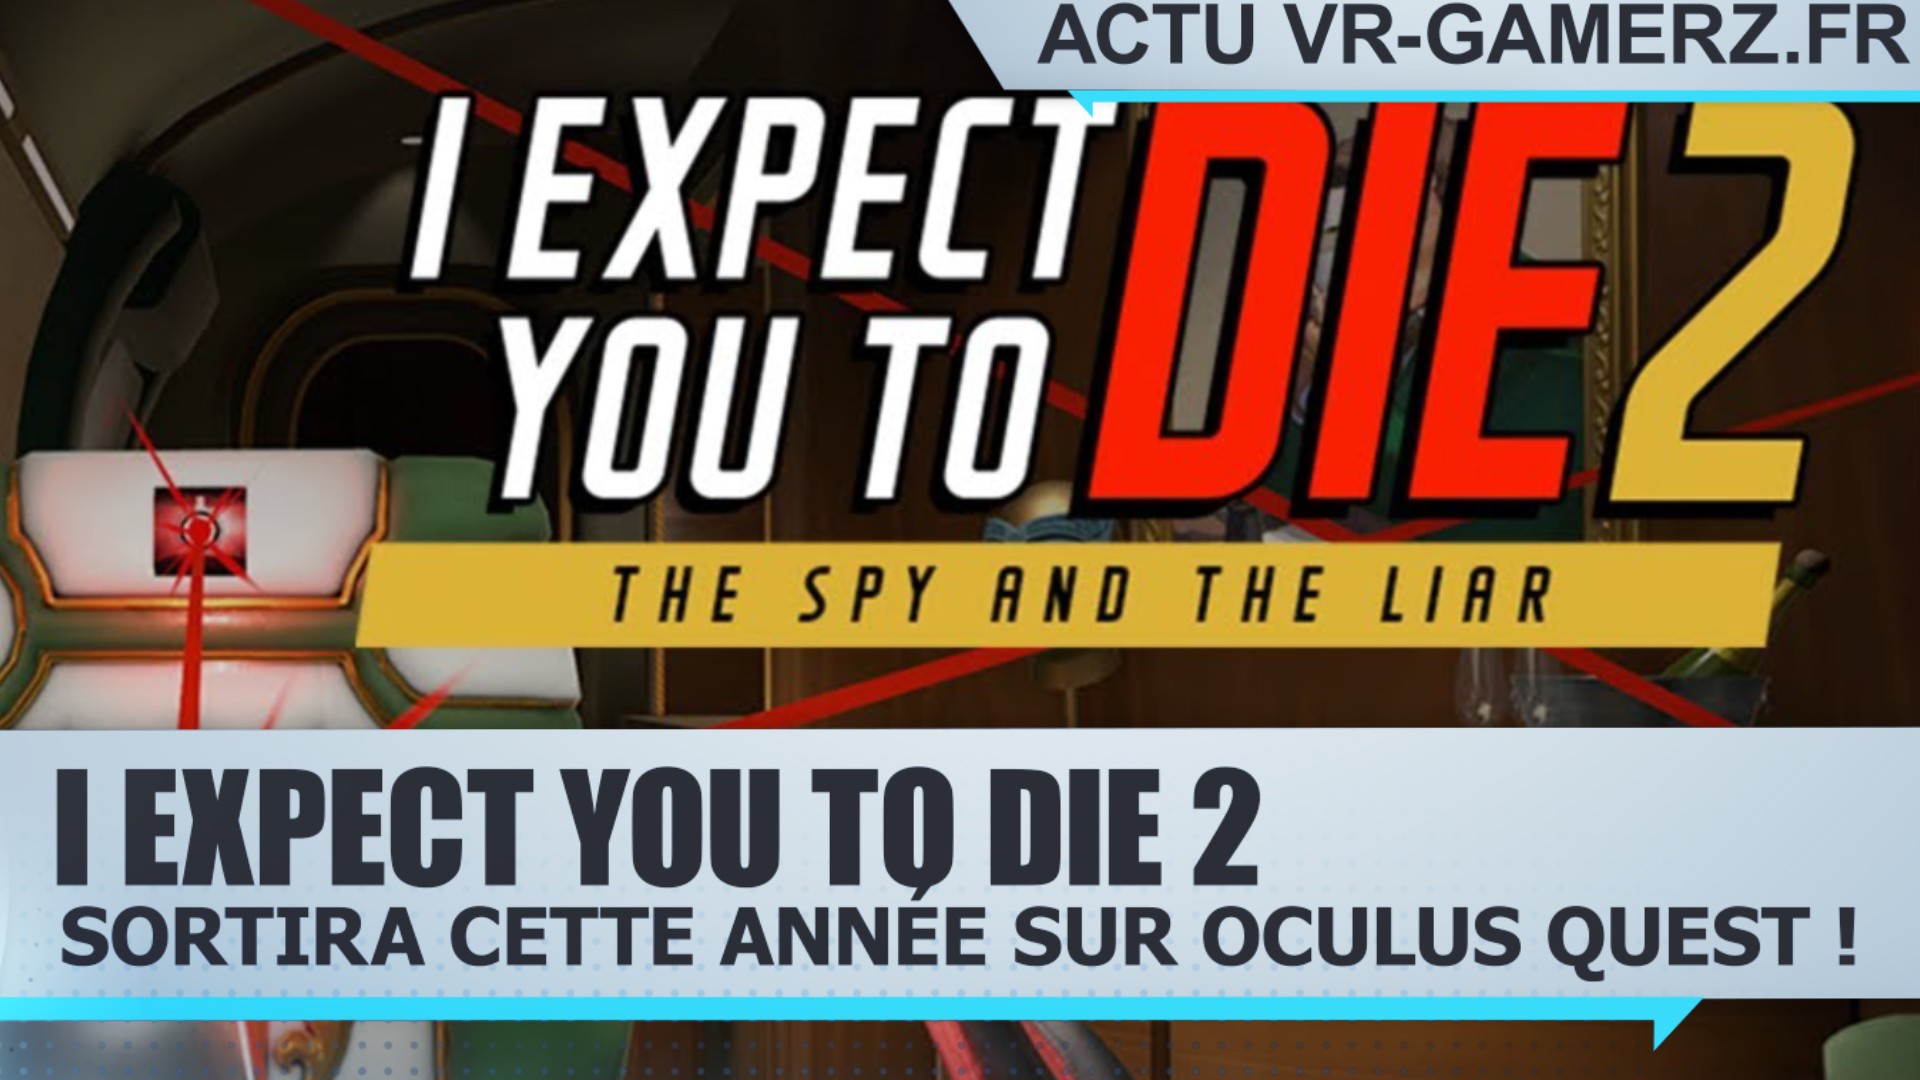 I expect you to die 2 sortira cette année sur Oculus quest !